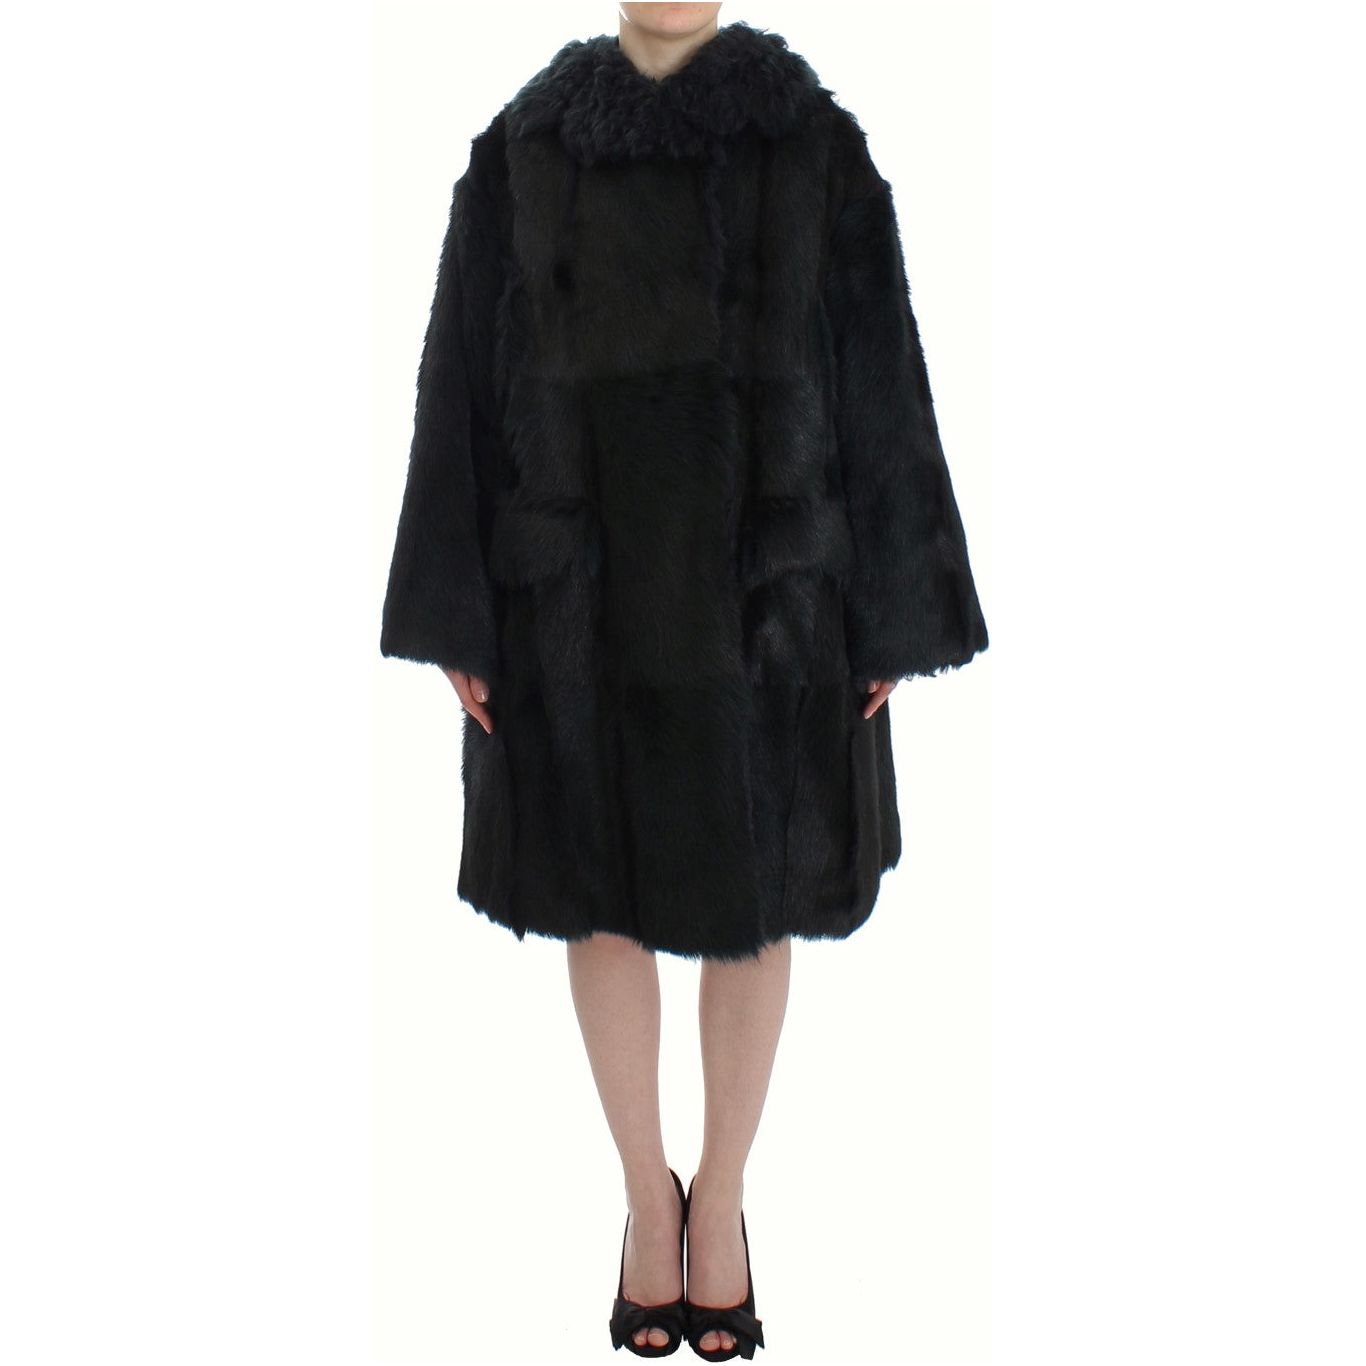 Dolce & Gabbana Exquisite Shearling Coat Jacket black-goat-fur-shearling-long-jacket-coat 62390-black-goat-fur-shearling-long-jacket-coat-1.jpg